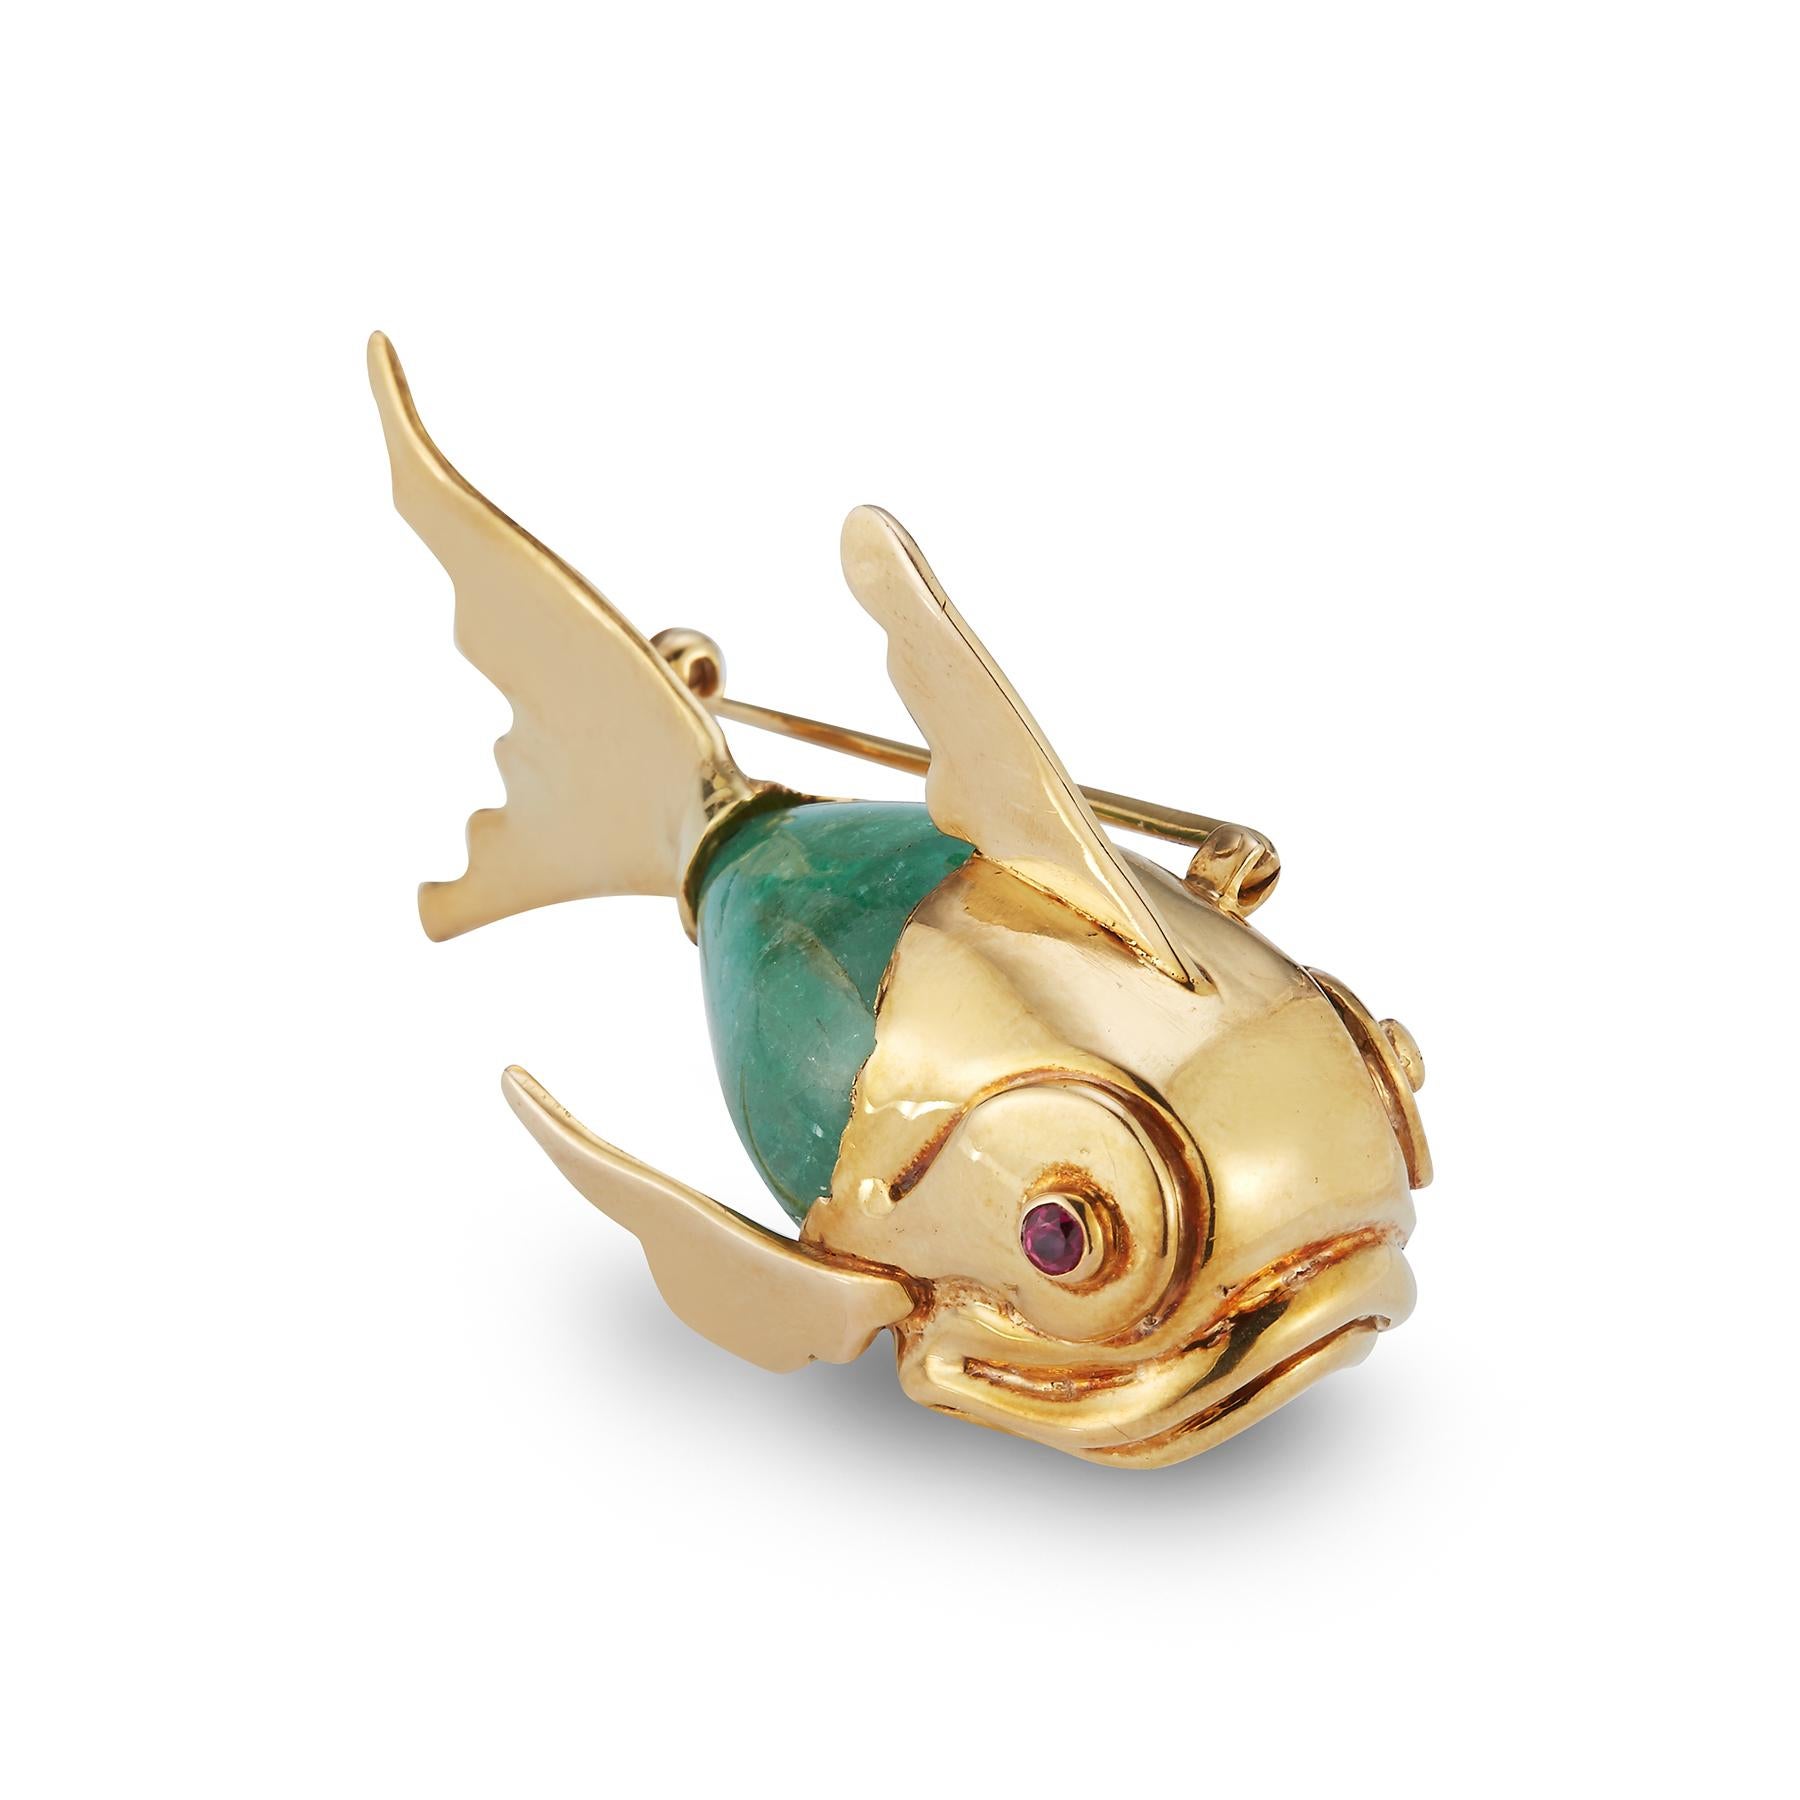 Cabochon Emerald Fish Brooch Pendant 
1 round cut ruby as the eye.
14 karat gold
Measurements: 2